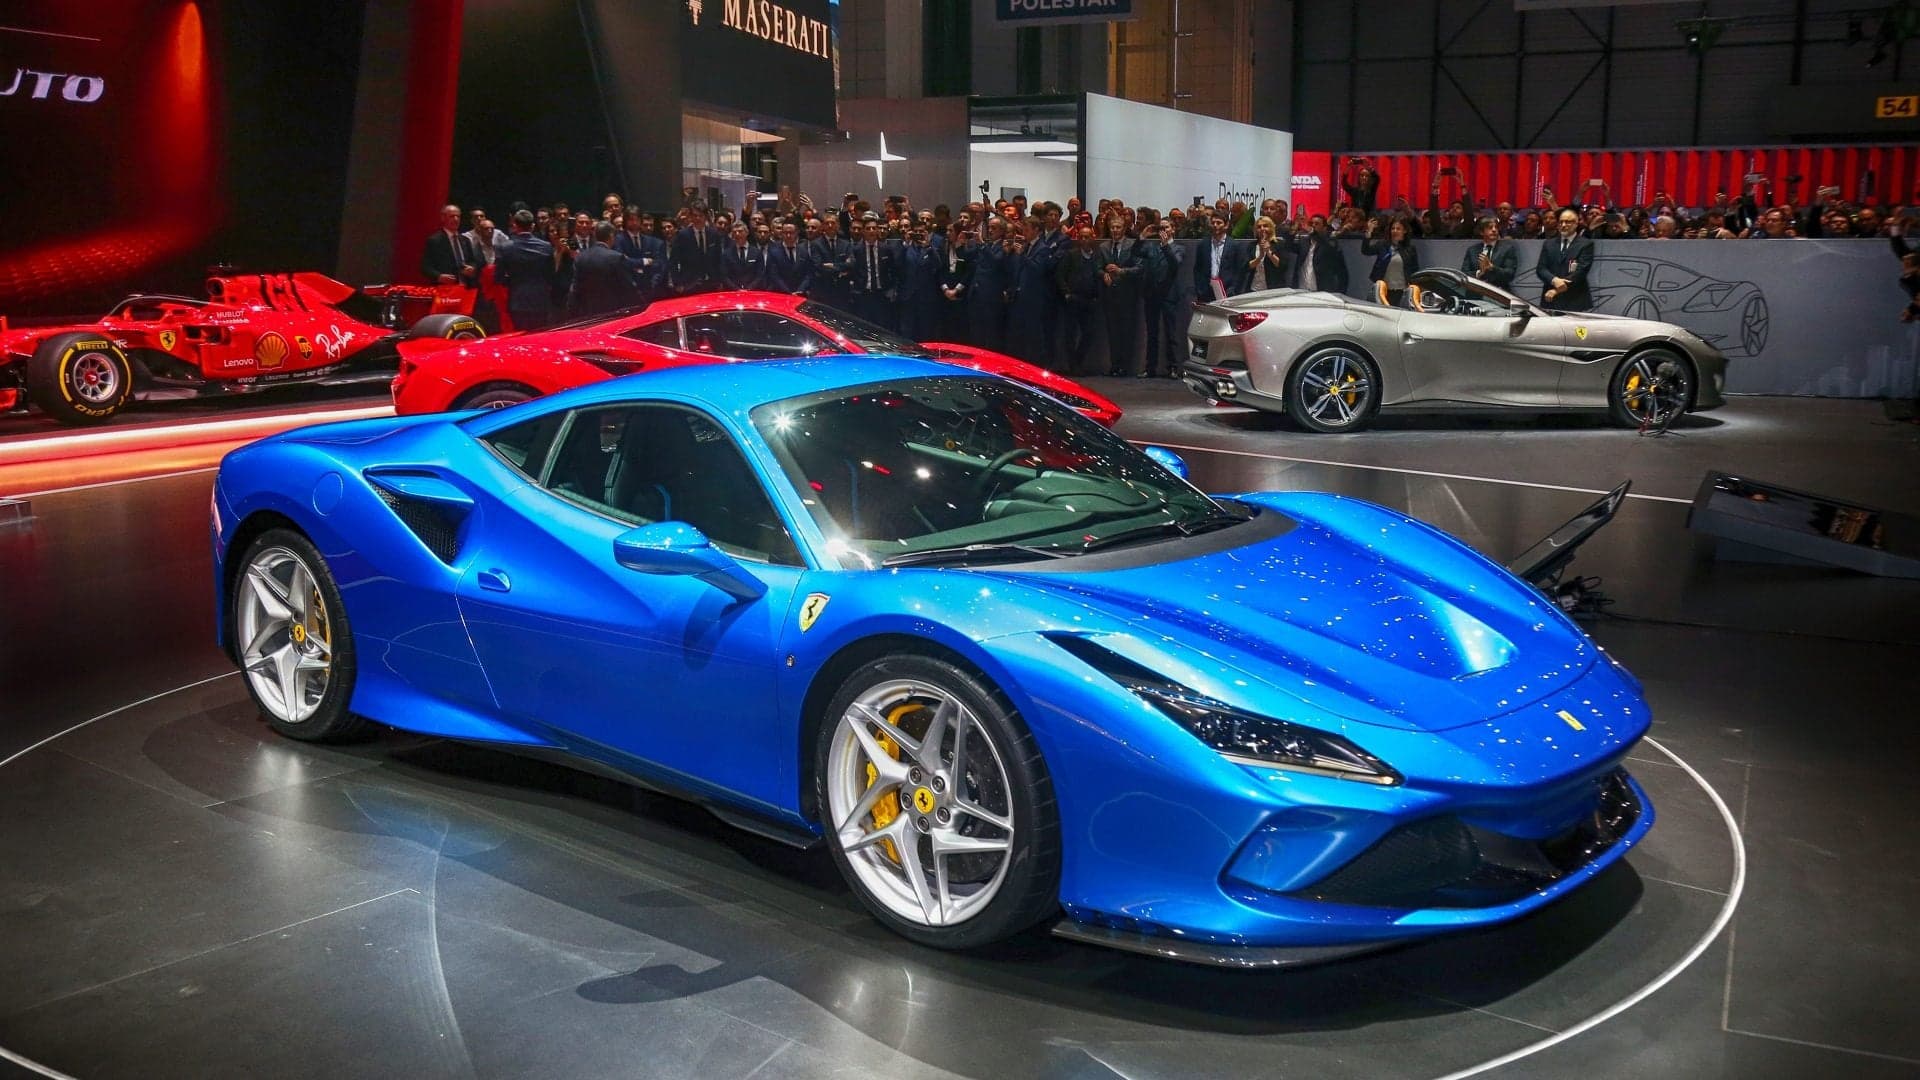 Ferrari’s Upcoming V6 Hybrid Engine Could Produce Up to 723 Horsepower: Report